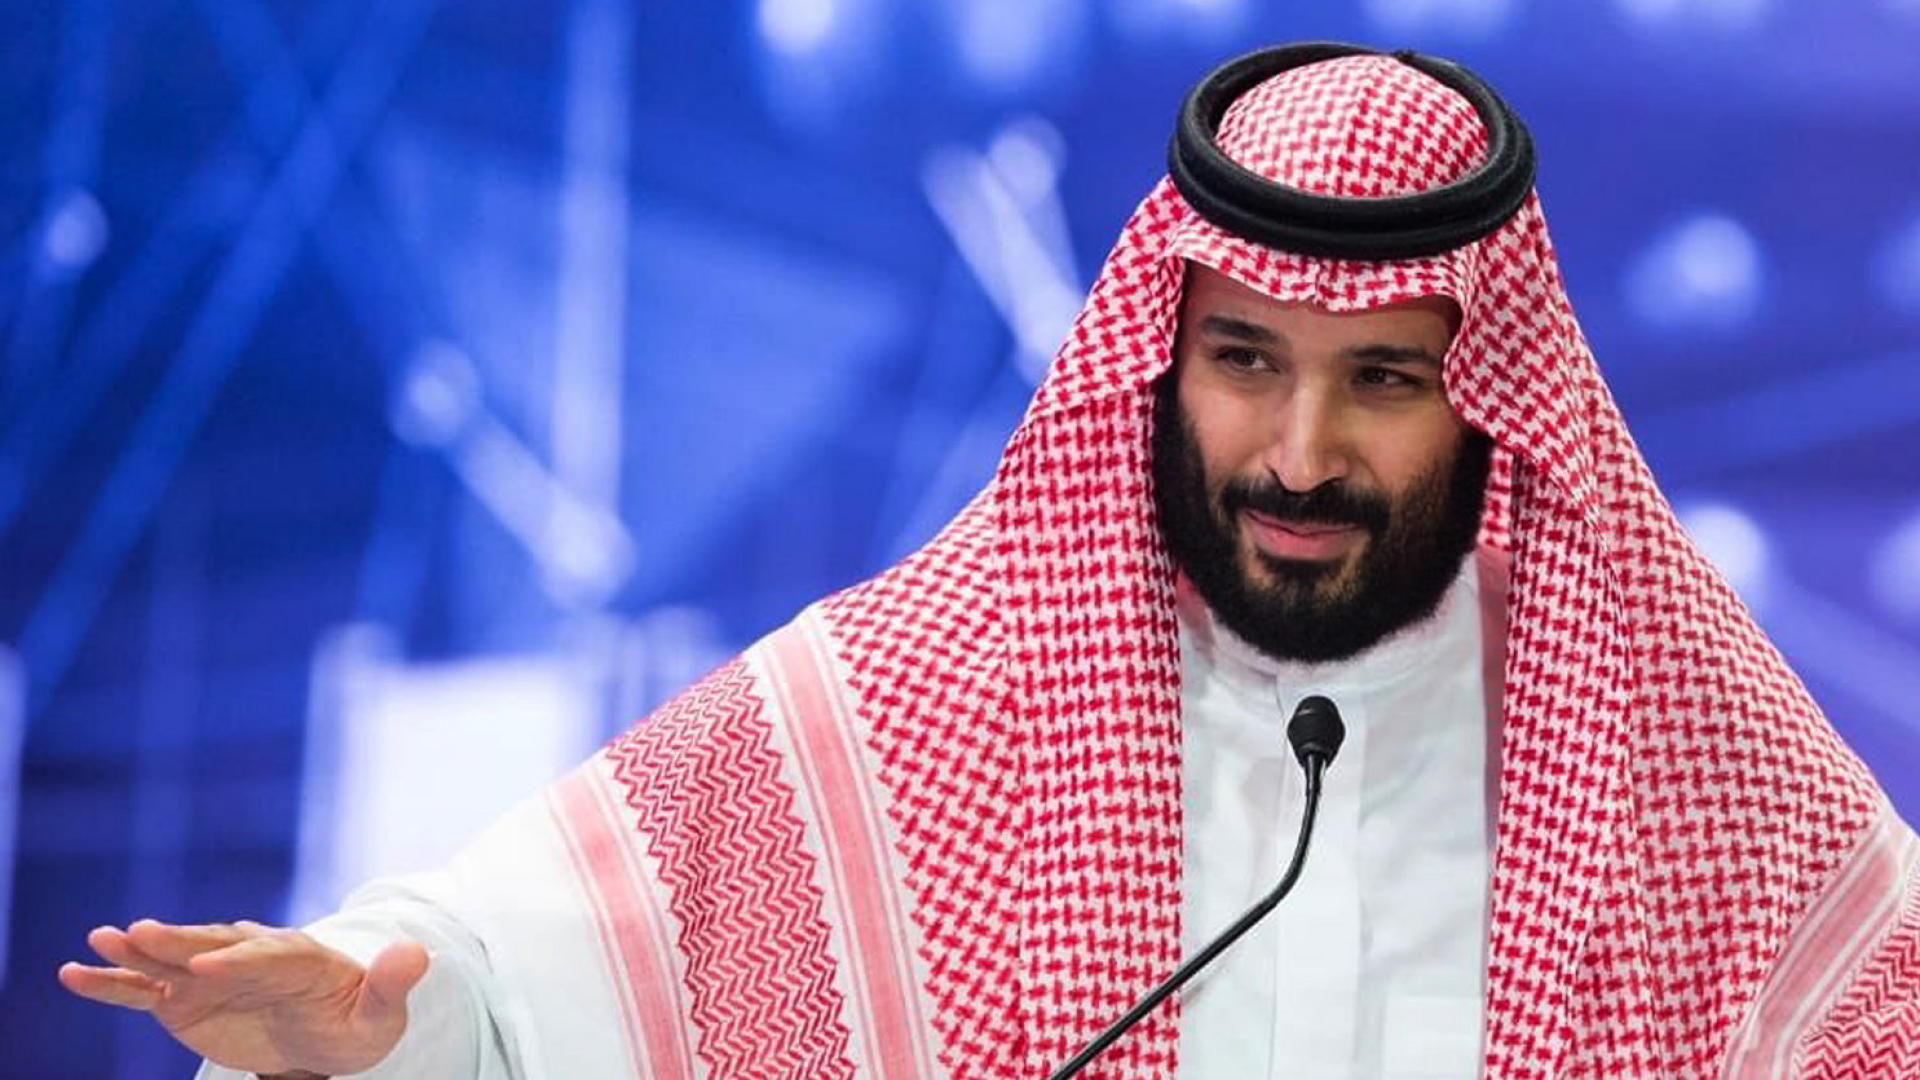 Fall Khashoggi: Saudi-Arabien warnt vor “roter Linie”